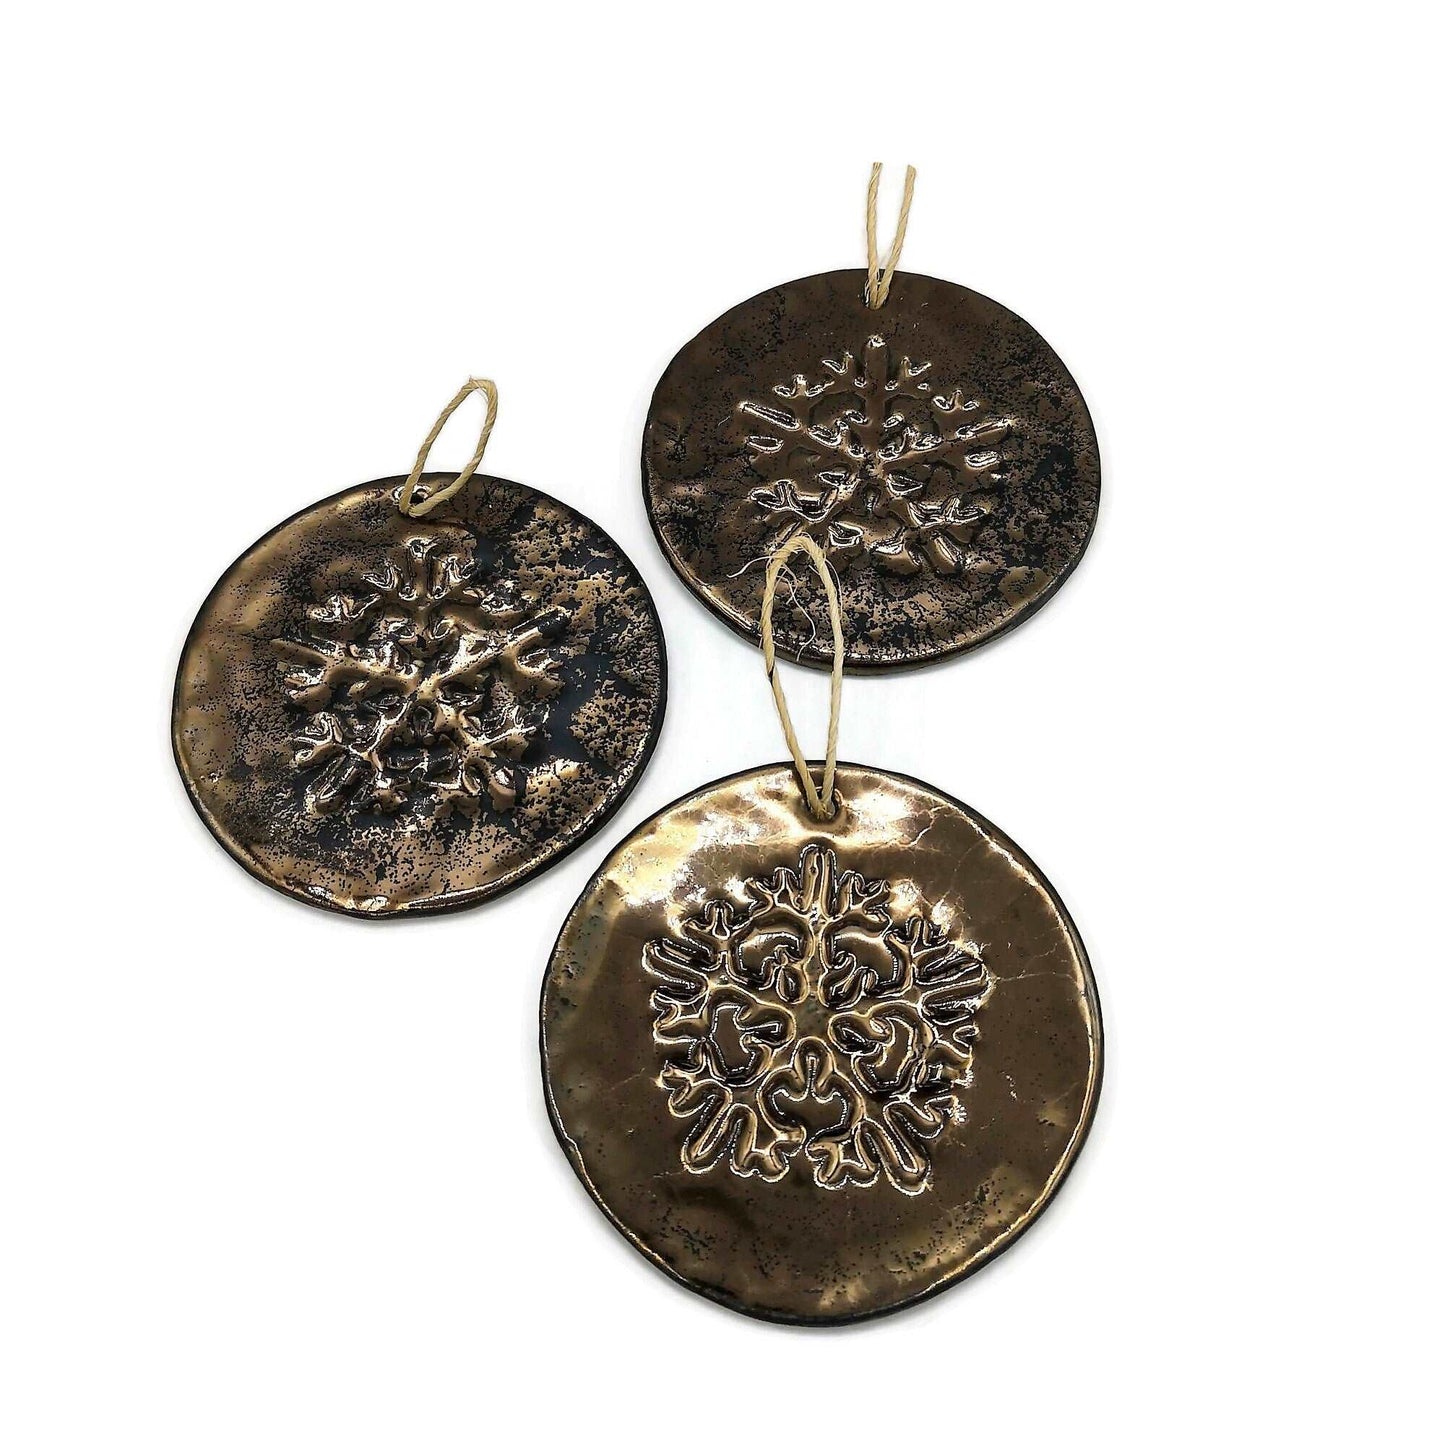 1Pc Golden Handmade Ceramic Snowflake Ornament, Metal Look Christmas Tree Decoration, Gift Idea